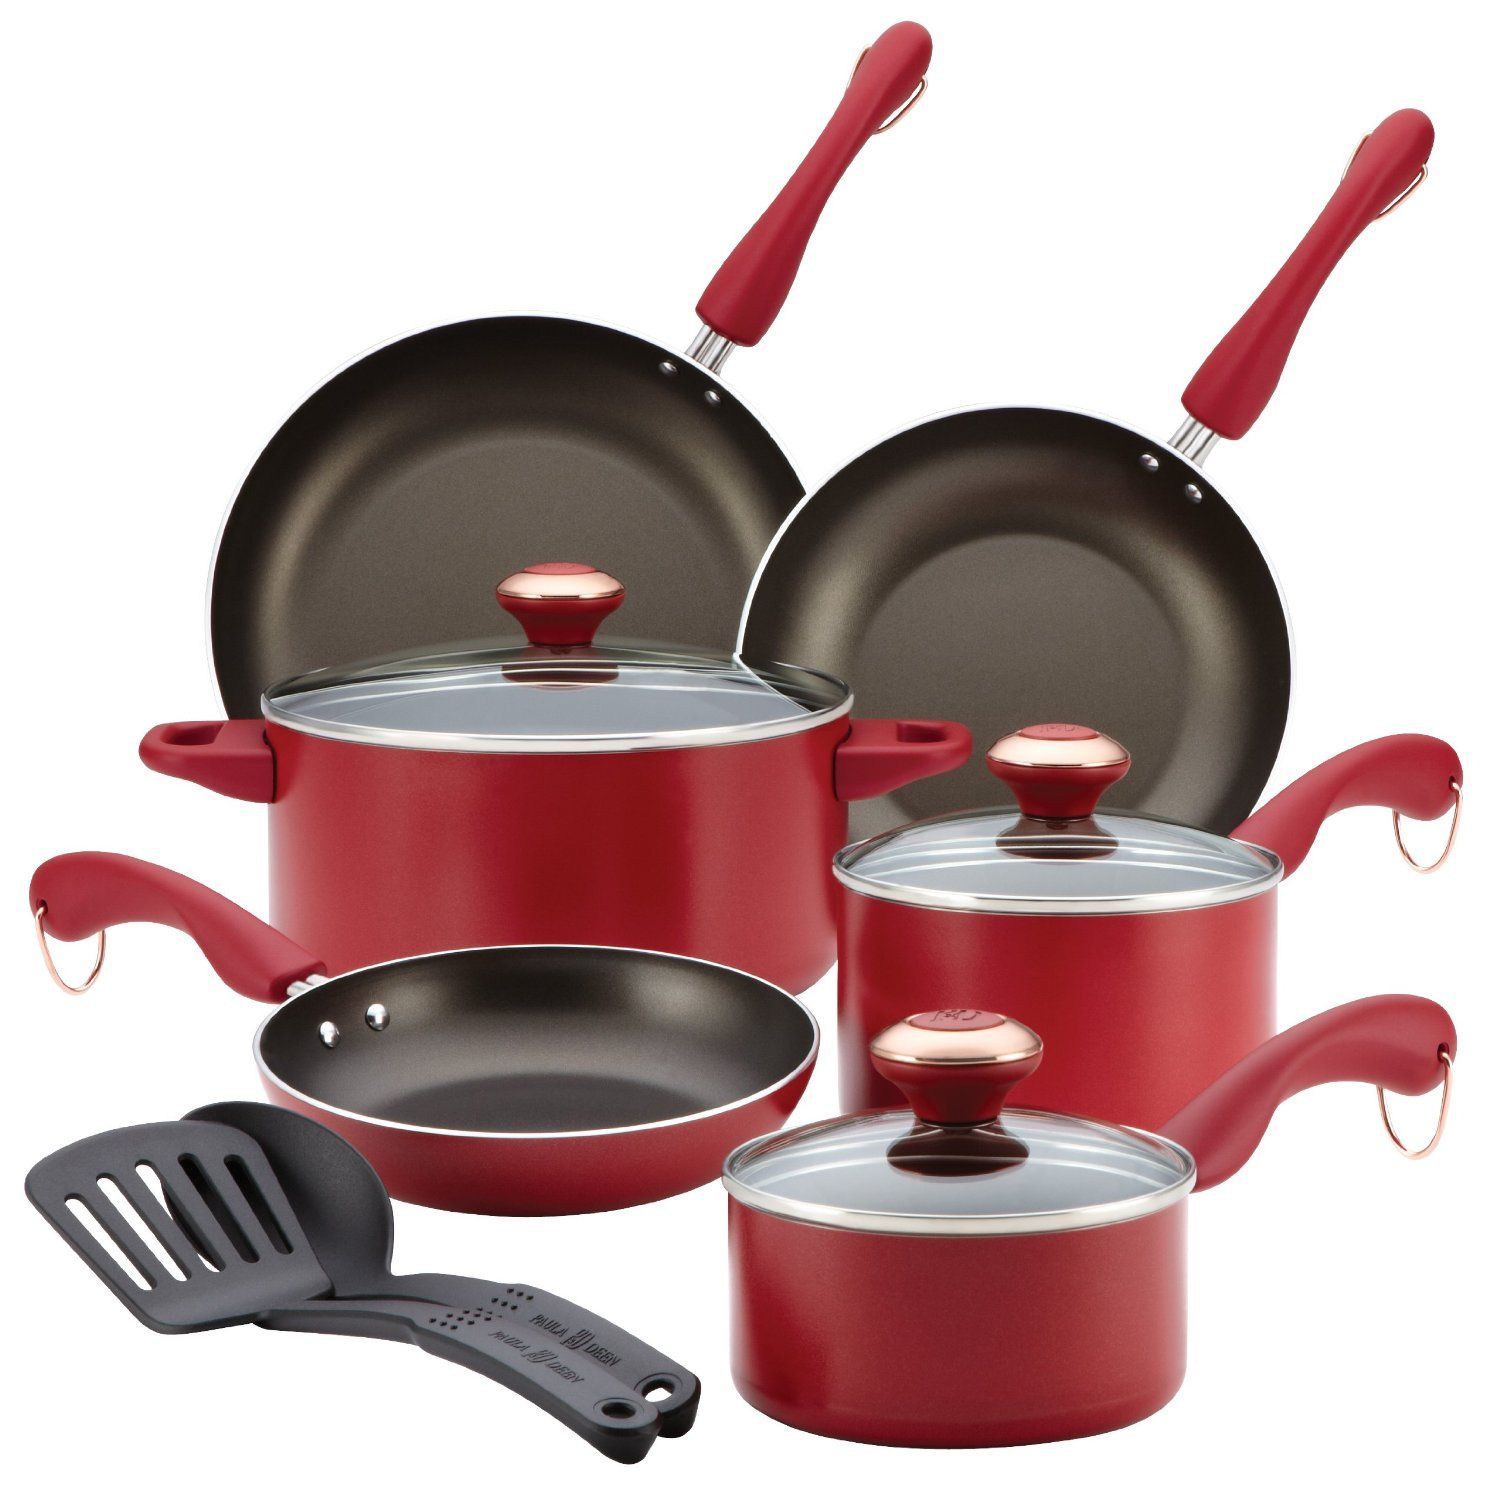 Paula Deen Signature Dishwasher Safe Nonstick Cookware Pots And Pans Set 11 Pcs 